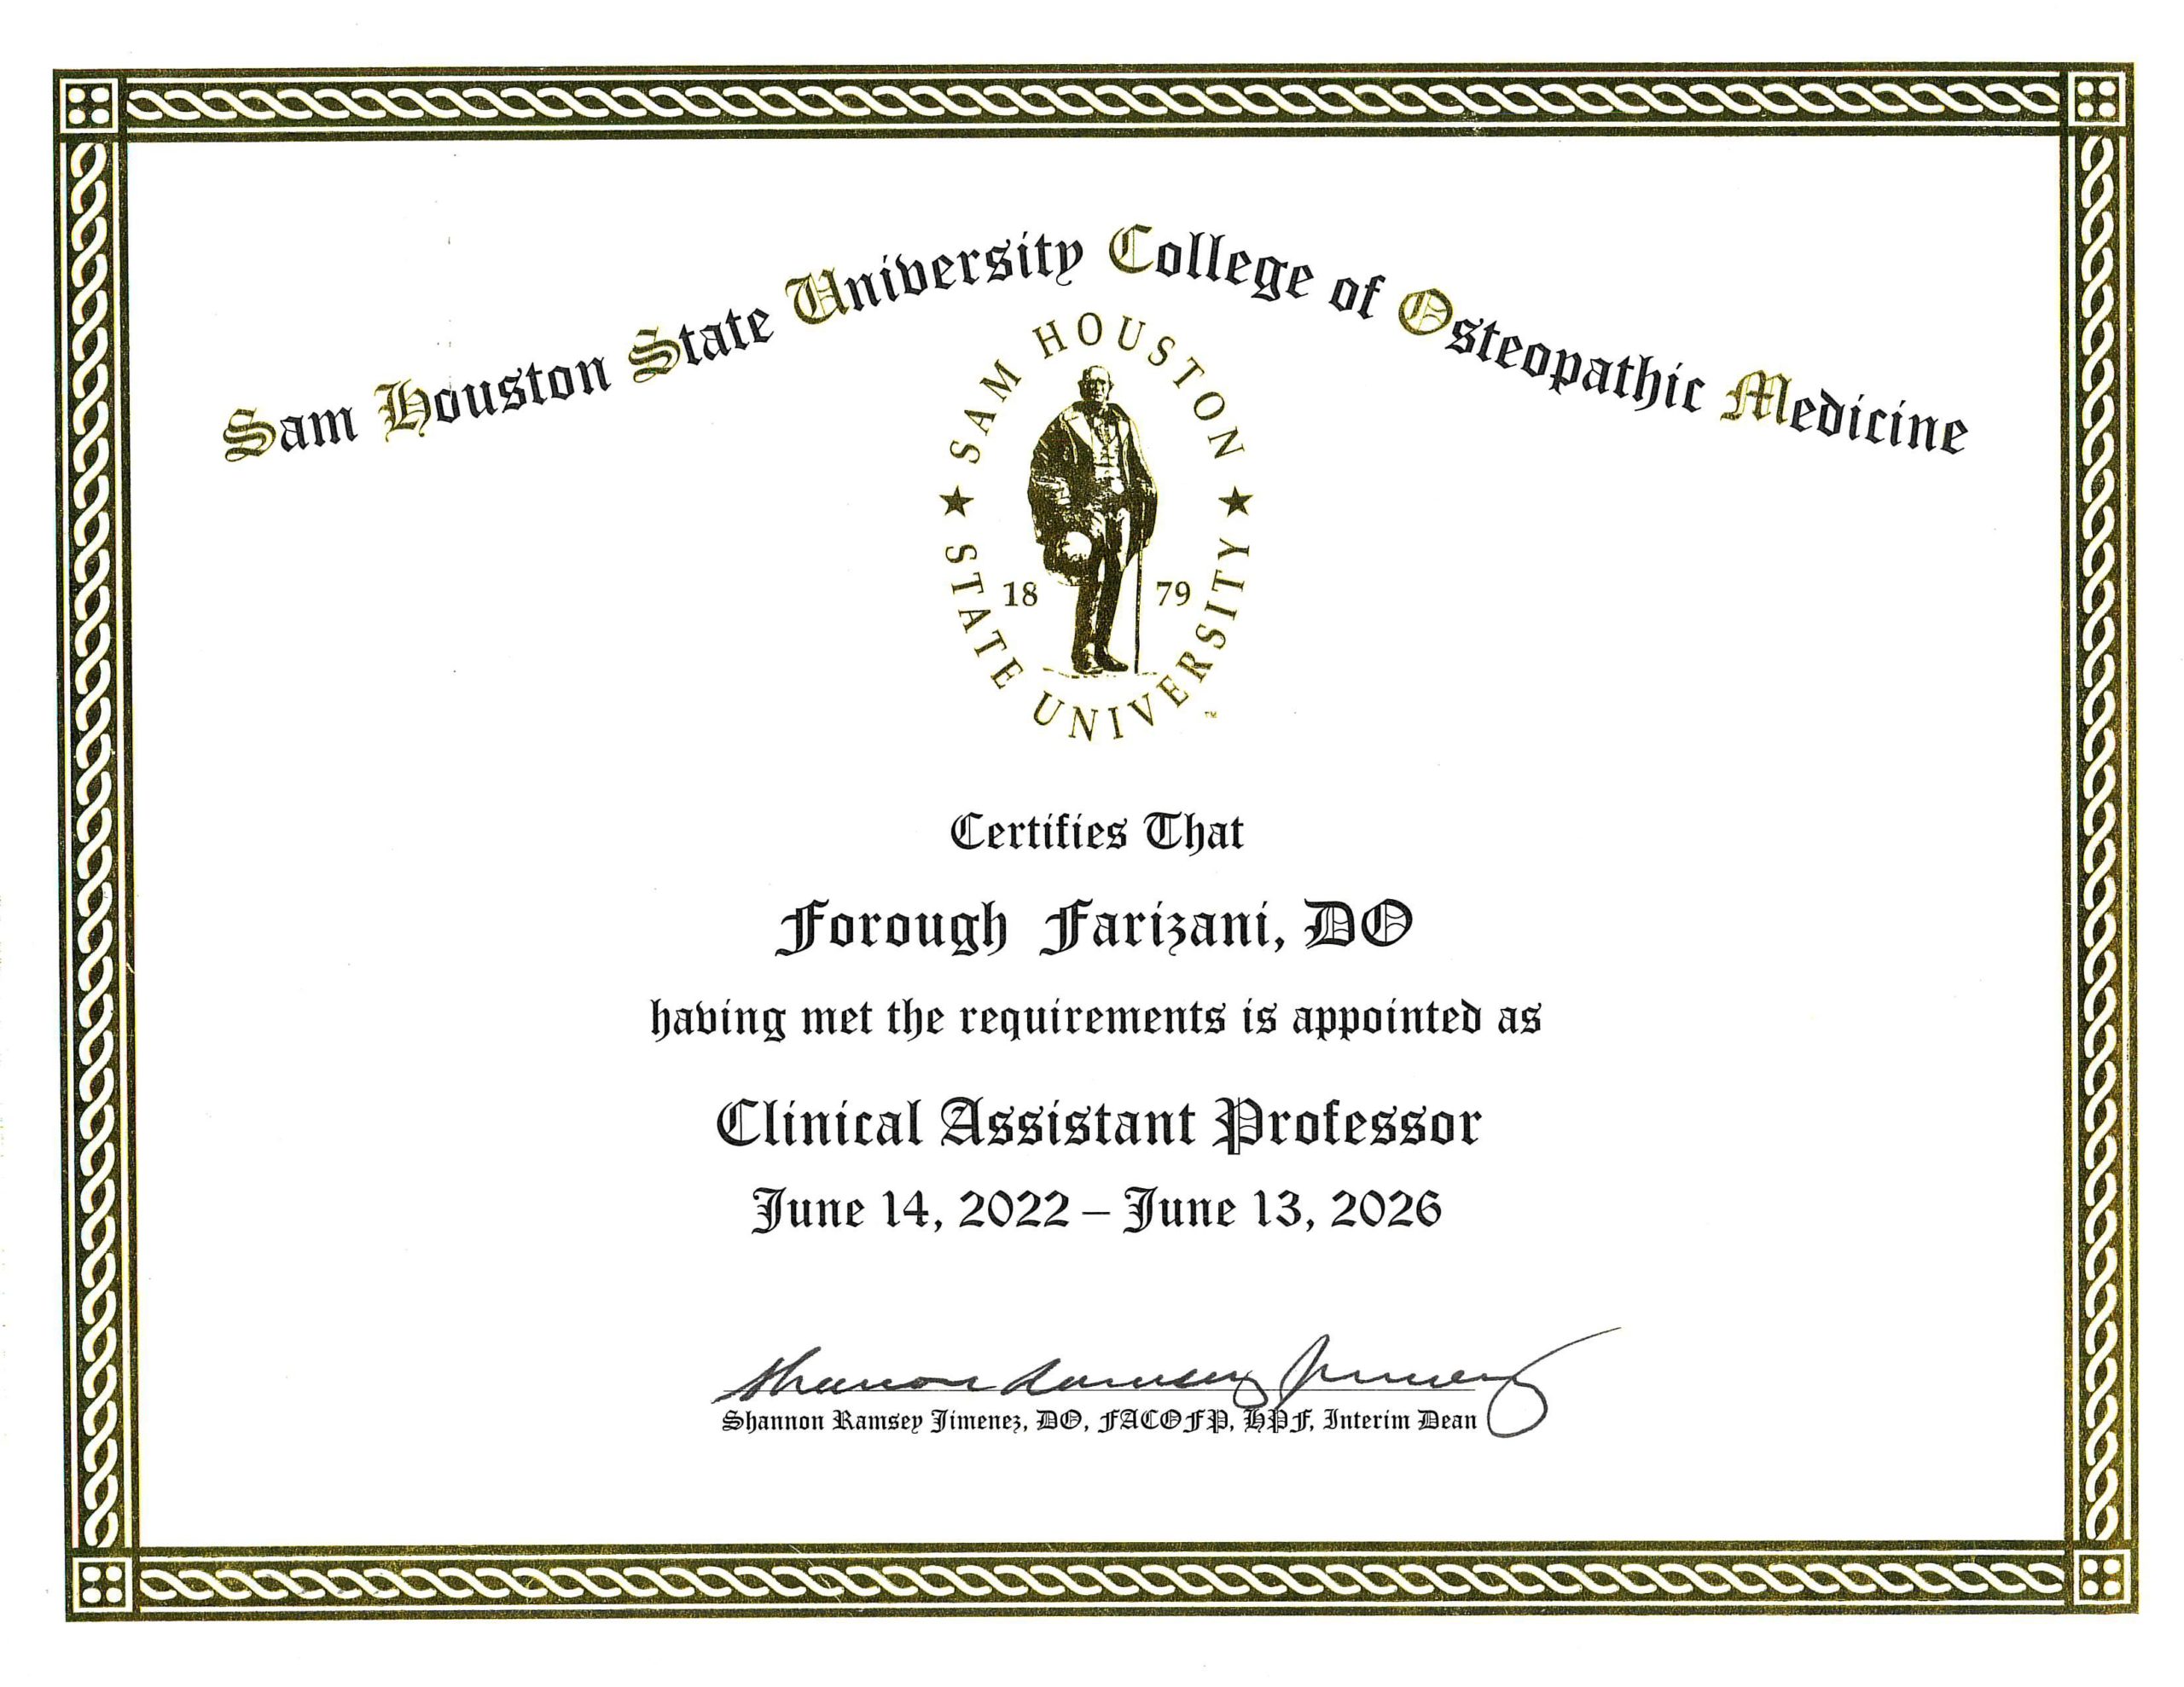 Clinical Assistant Professor Certificate